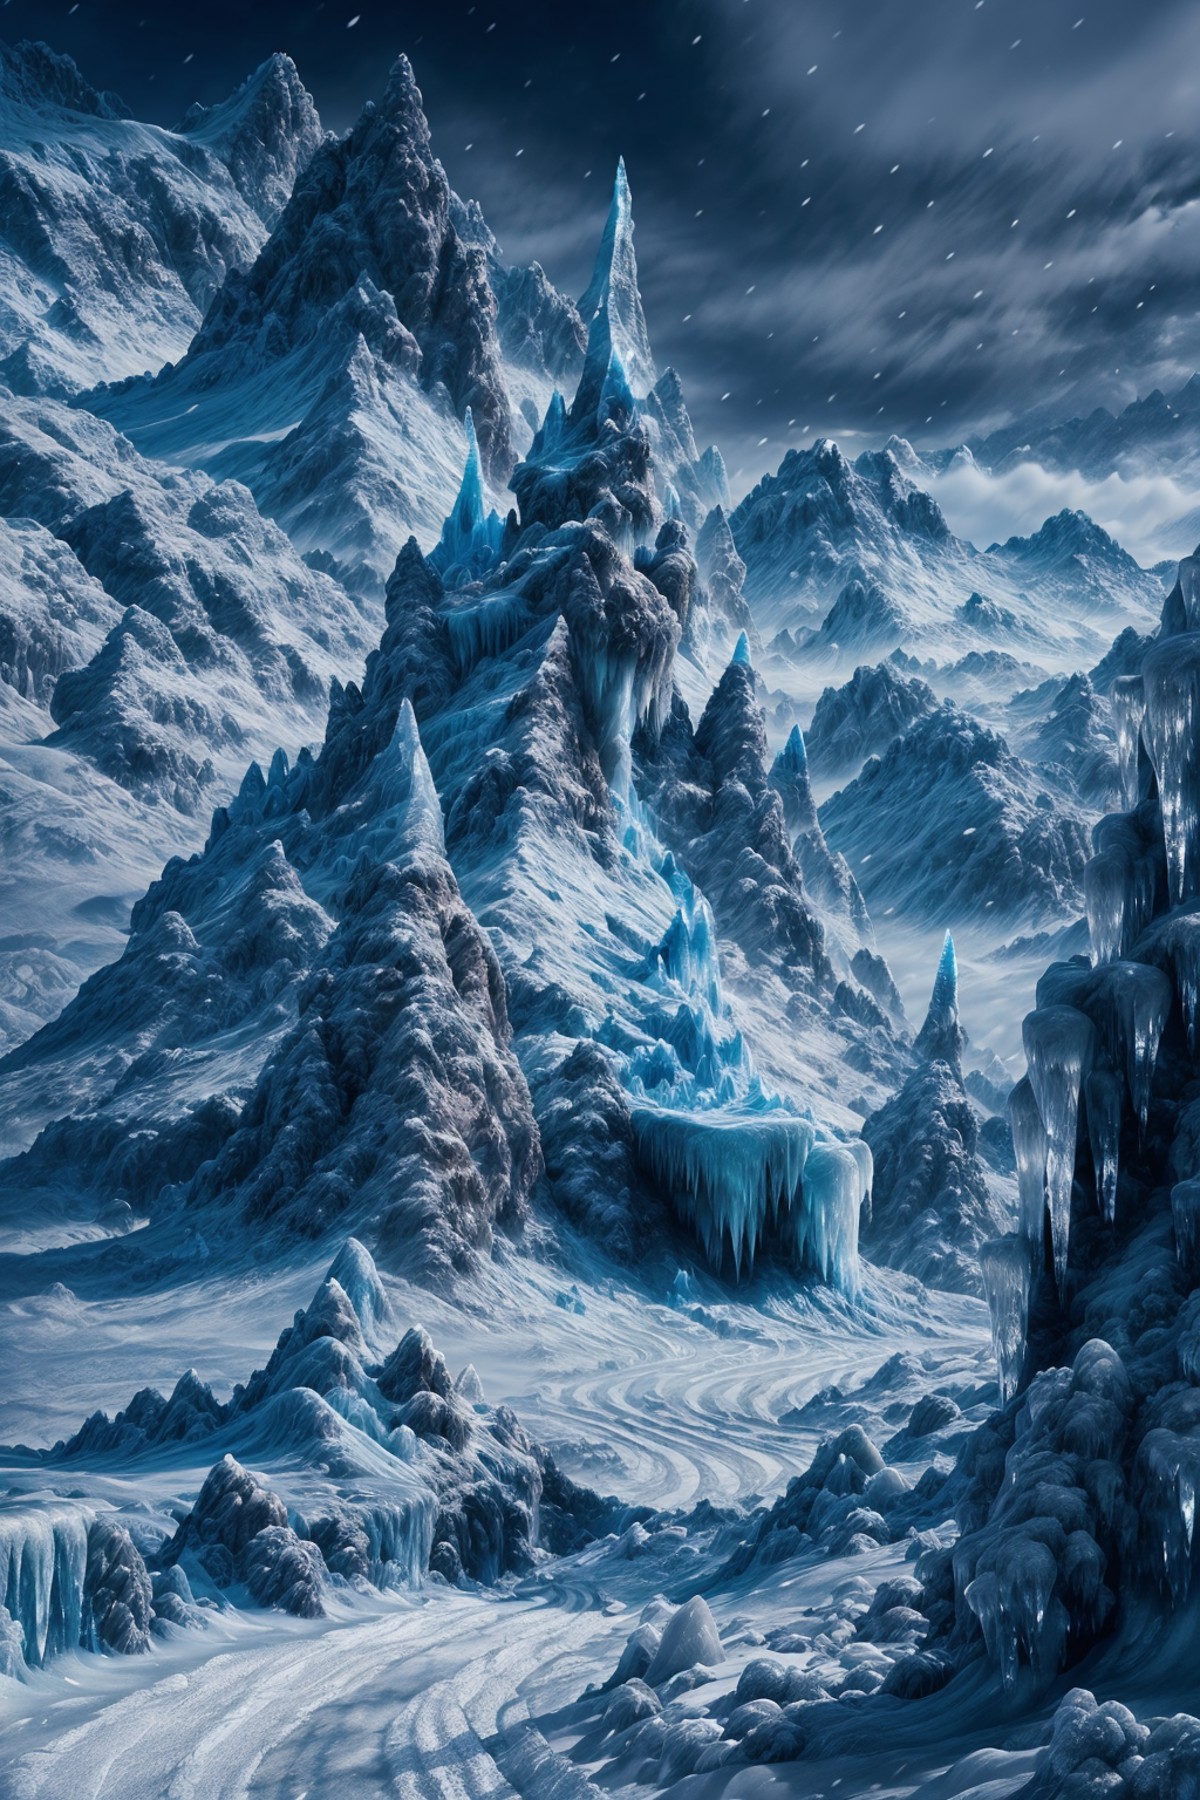 <lora:Xmas3:0.7> Xmas landscape with ice covered, fantasy, cinematic